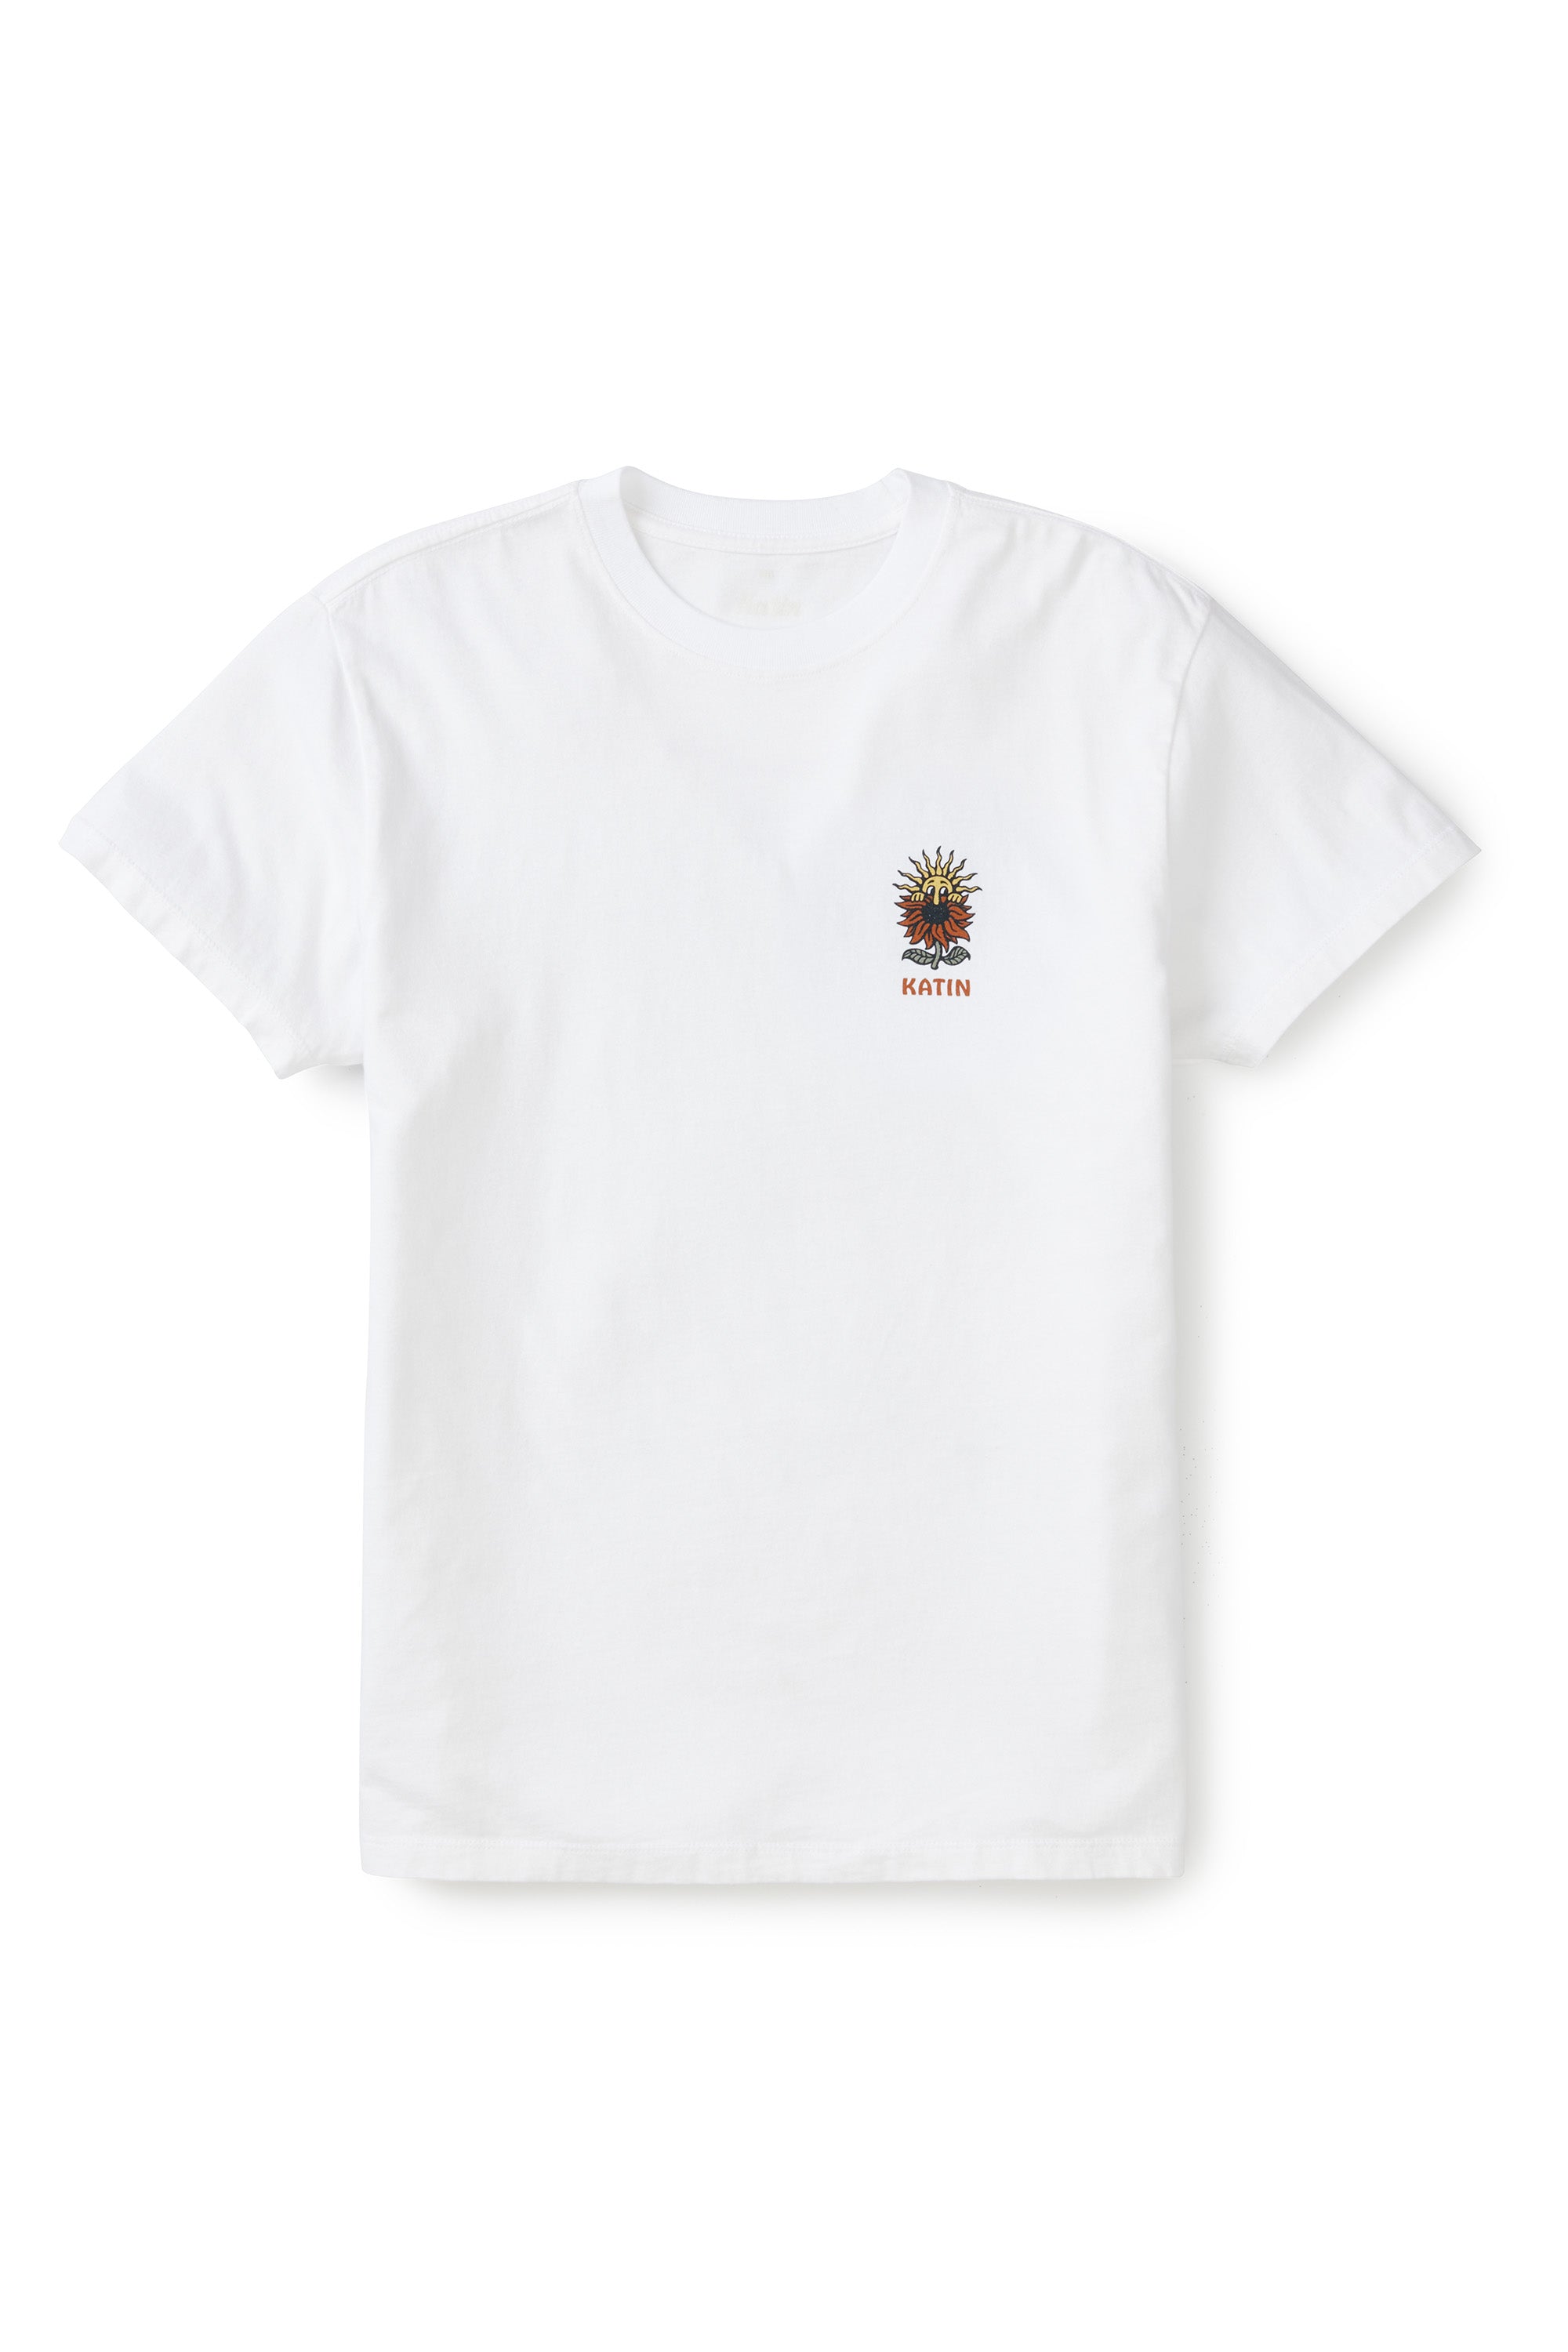 Pollen T-shirt | Katin USA - Child